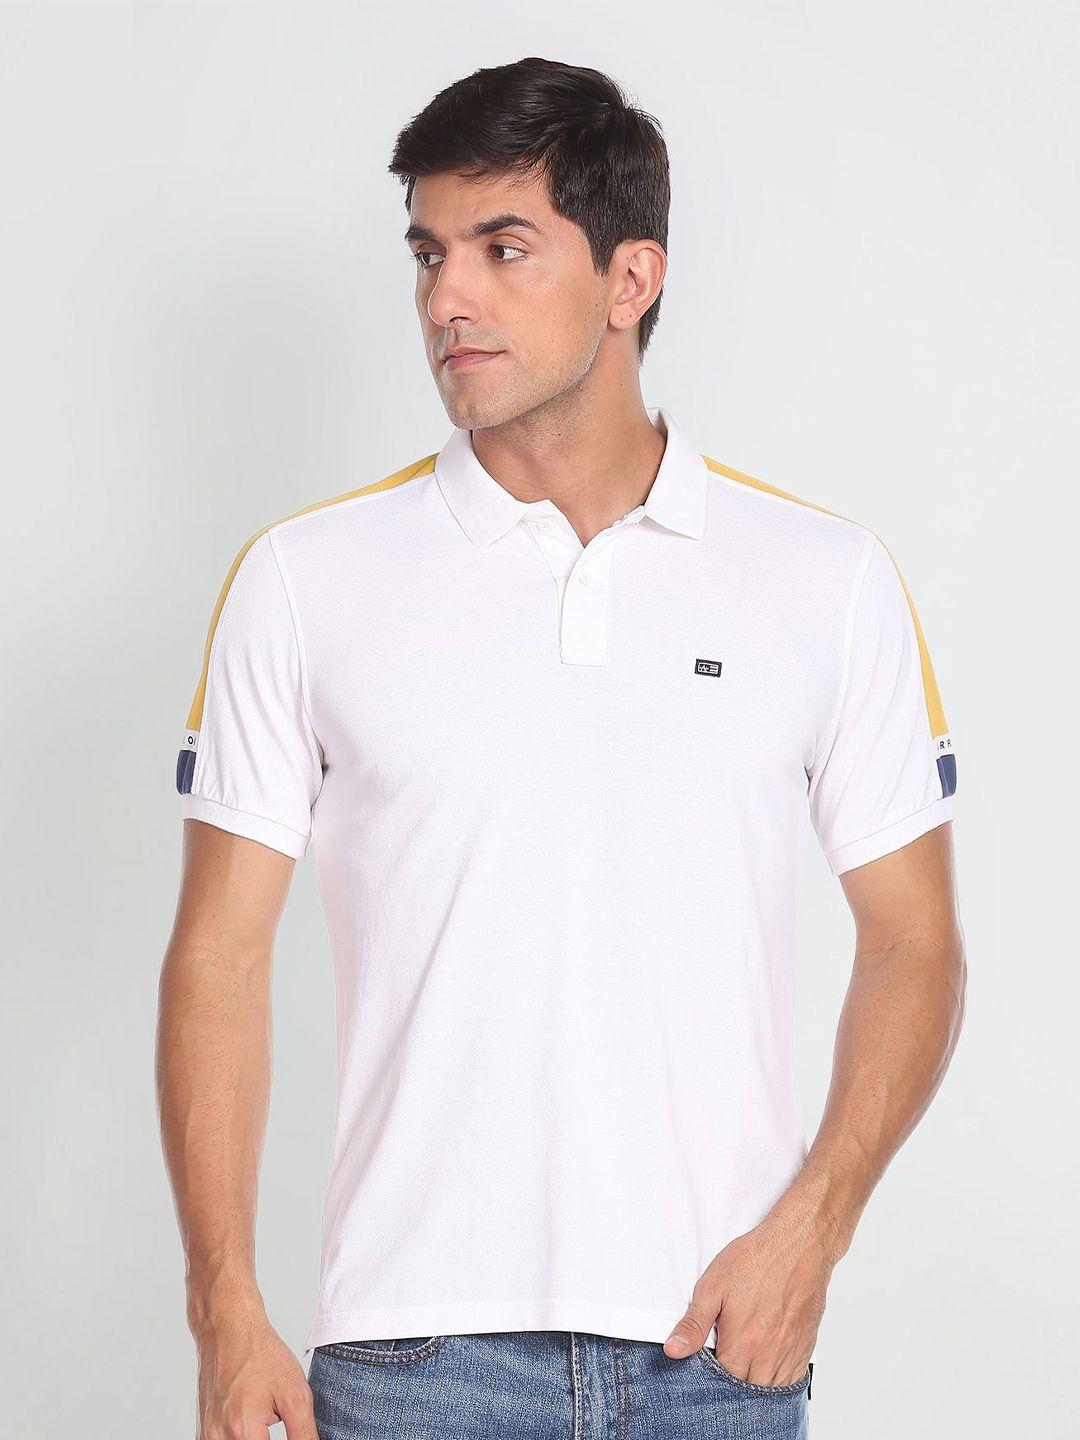 arrow sport polo collar short sleeves casual cotton t-shirt